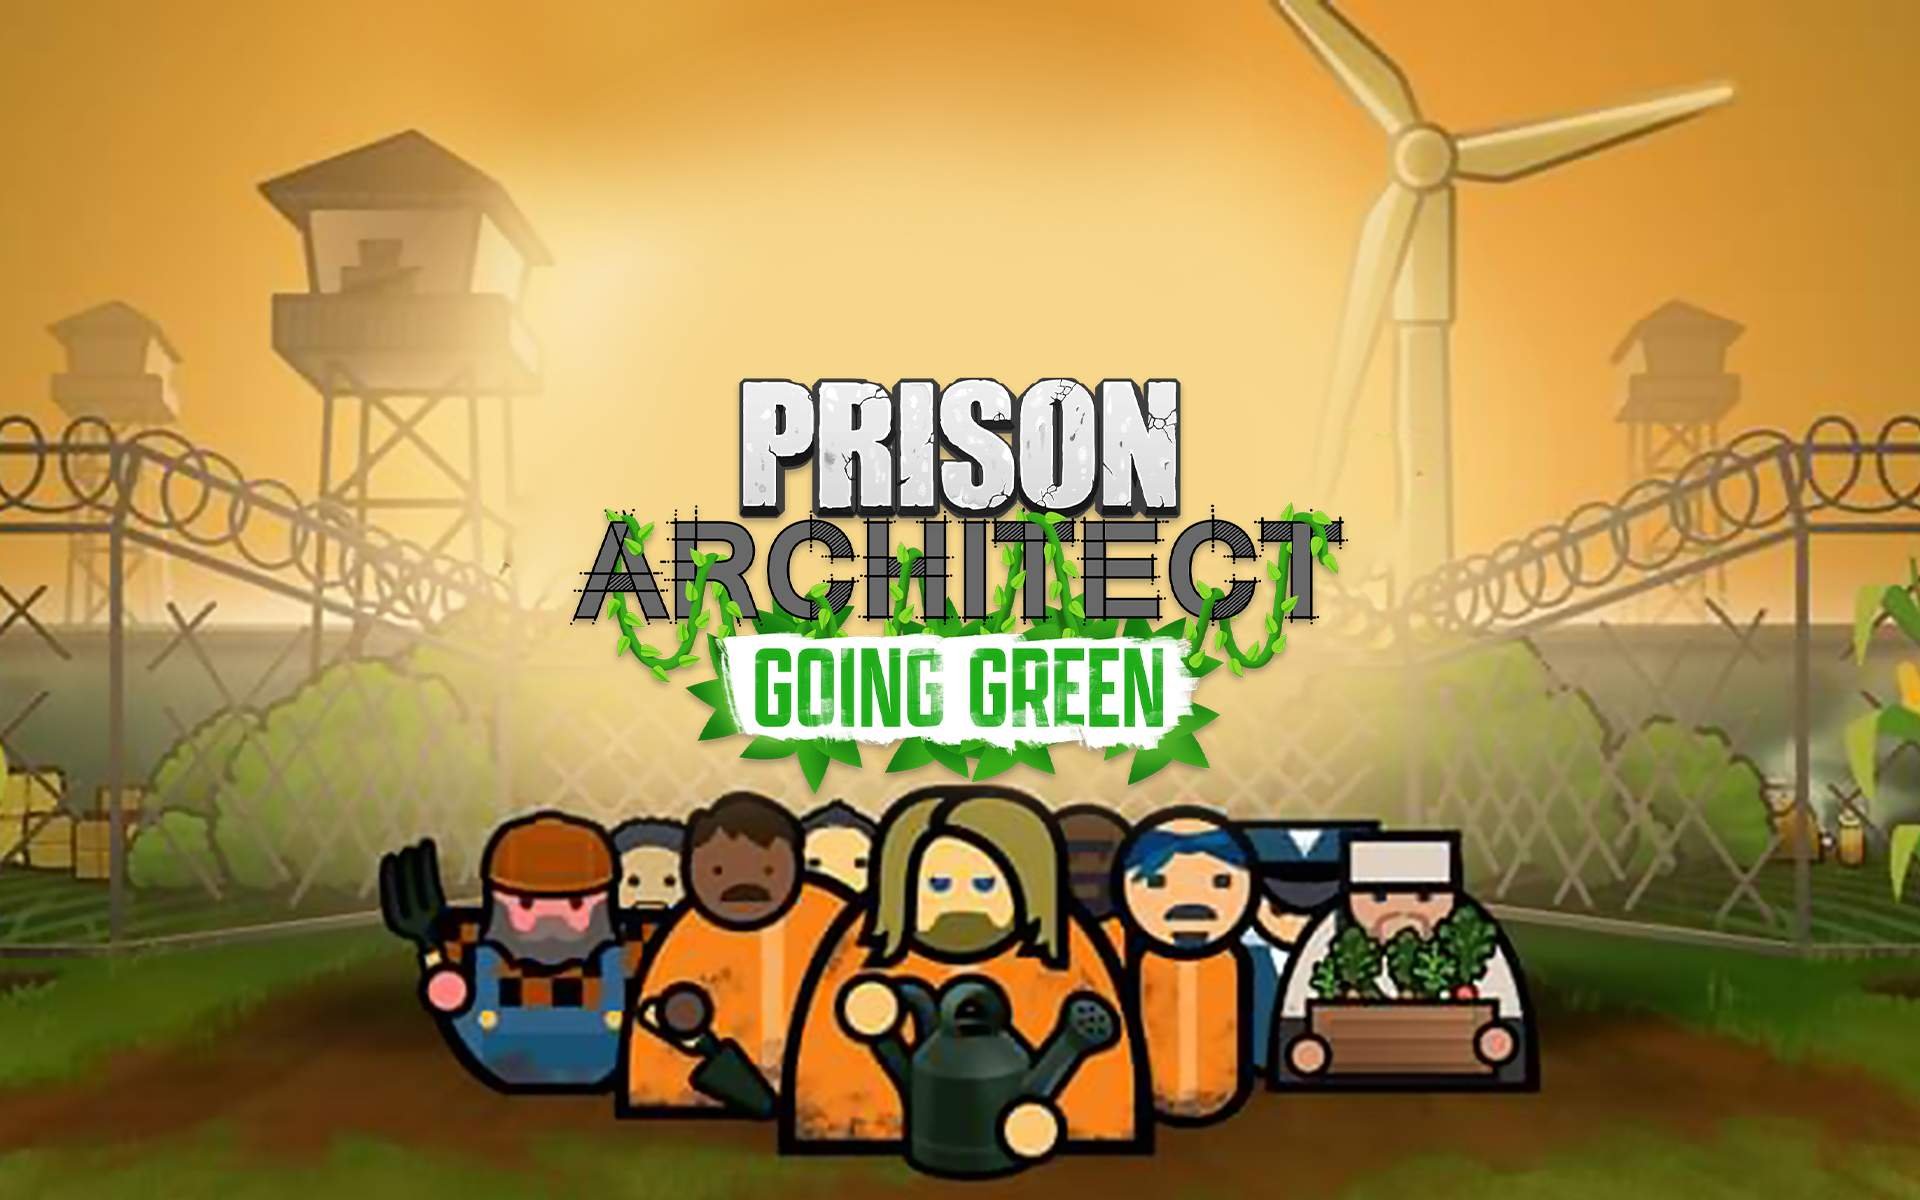 Prison Architect - Going Green por R$ 20.69